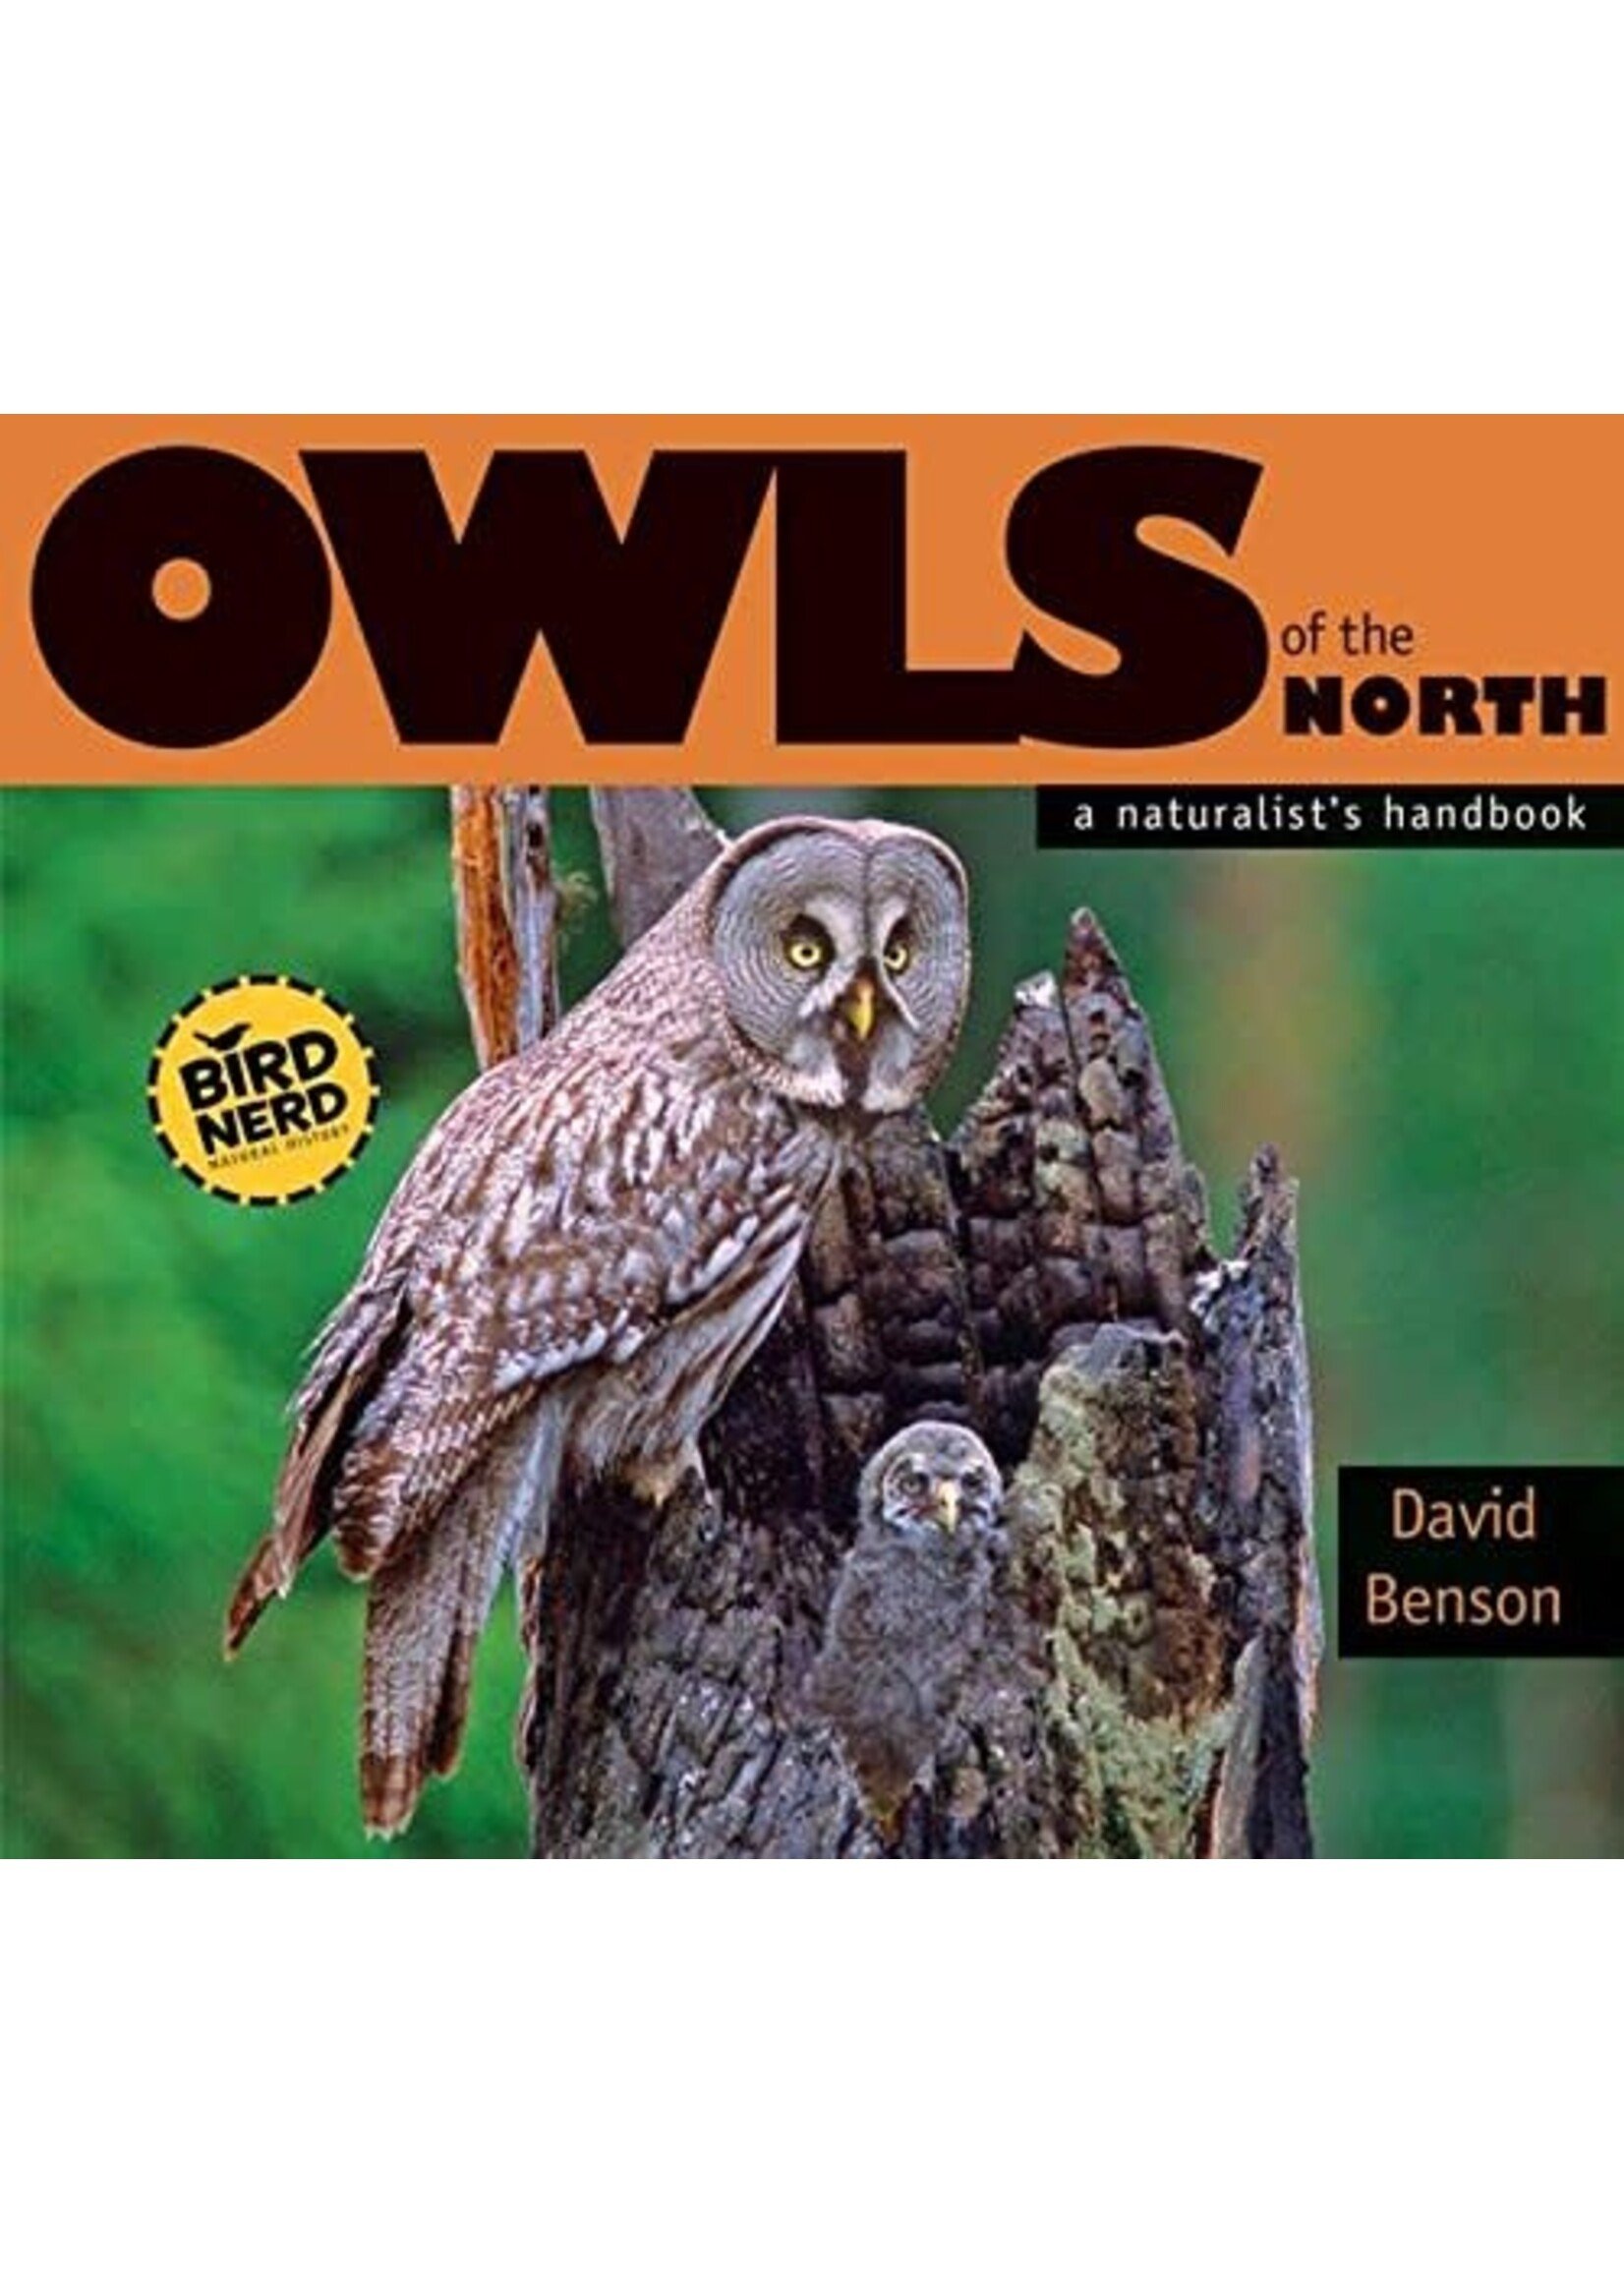 Owls of the North: A Naturalist's Handbook